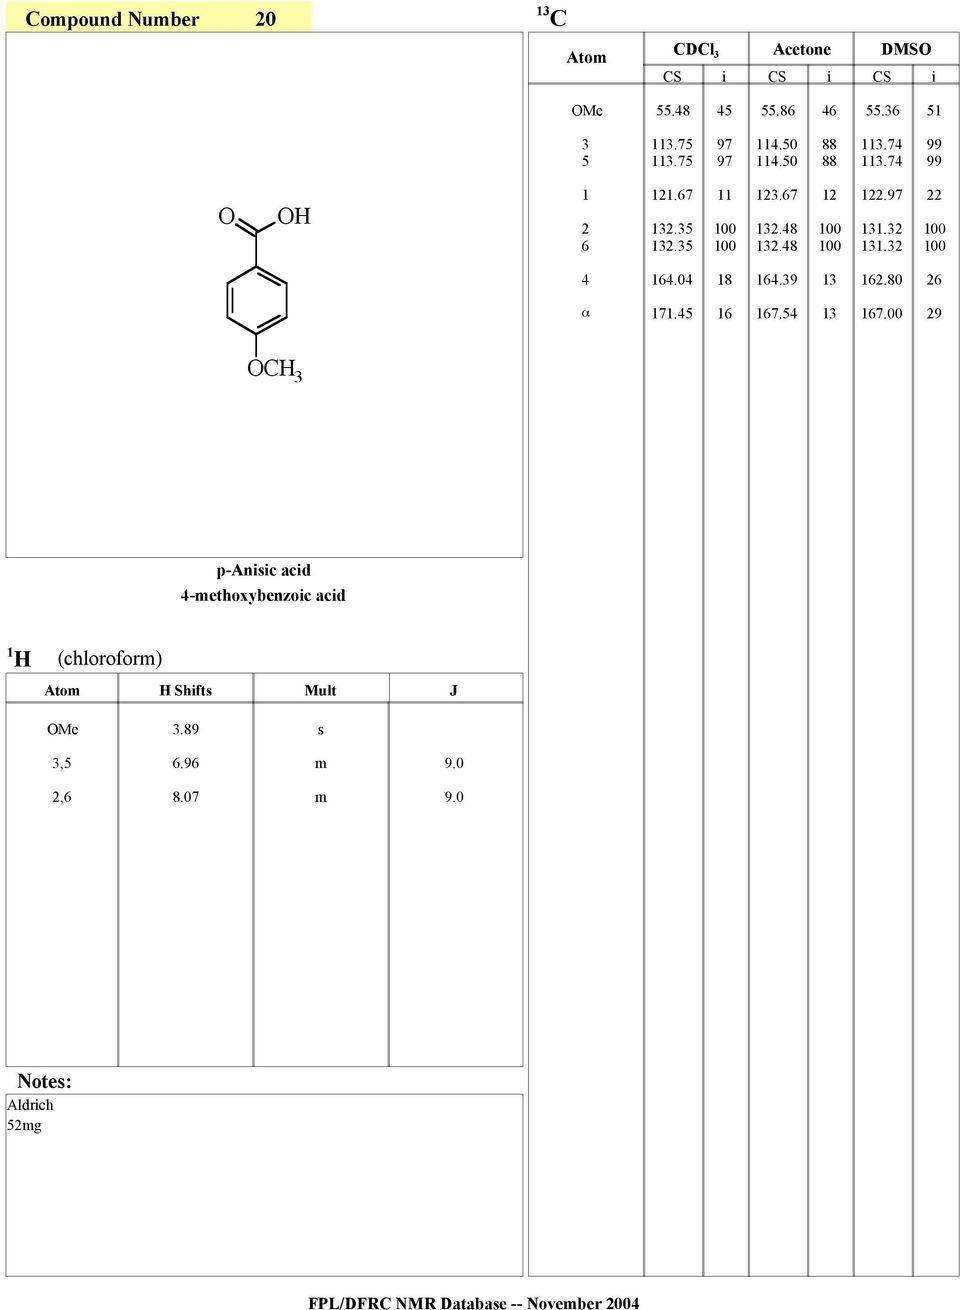 00 C 3 p-nc ac 4-ethoxybenzoc ac (chlorofor) Shft 3.89 3,.